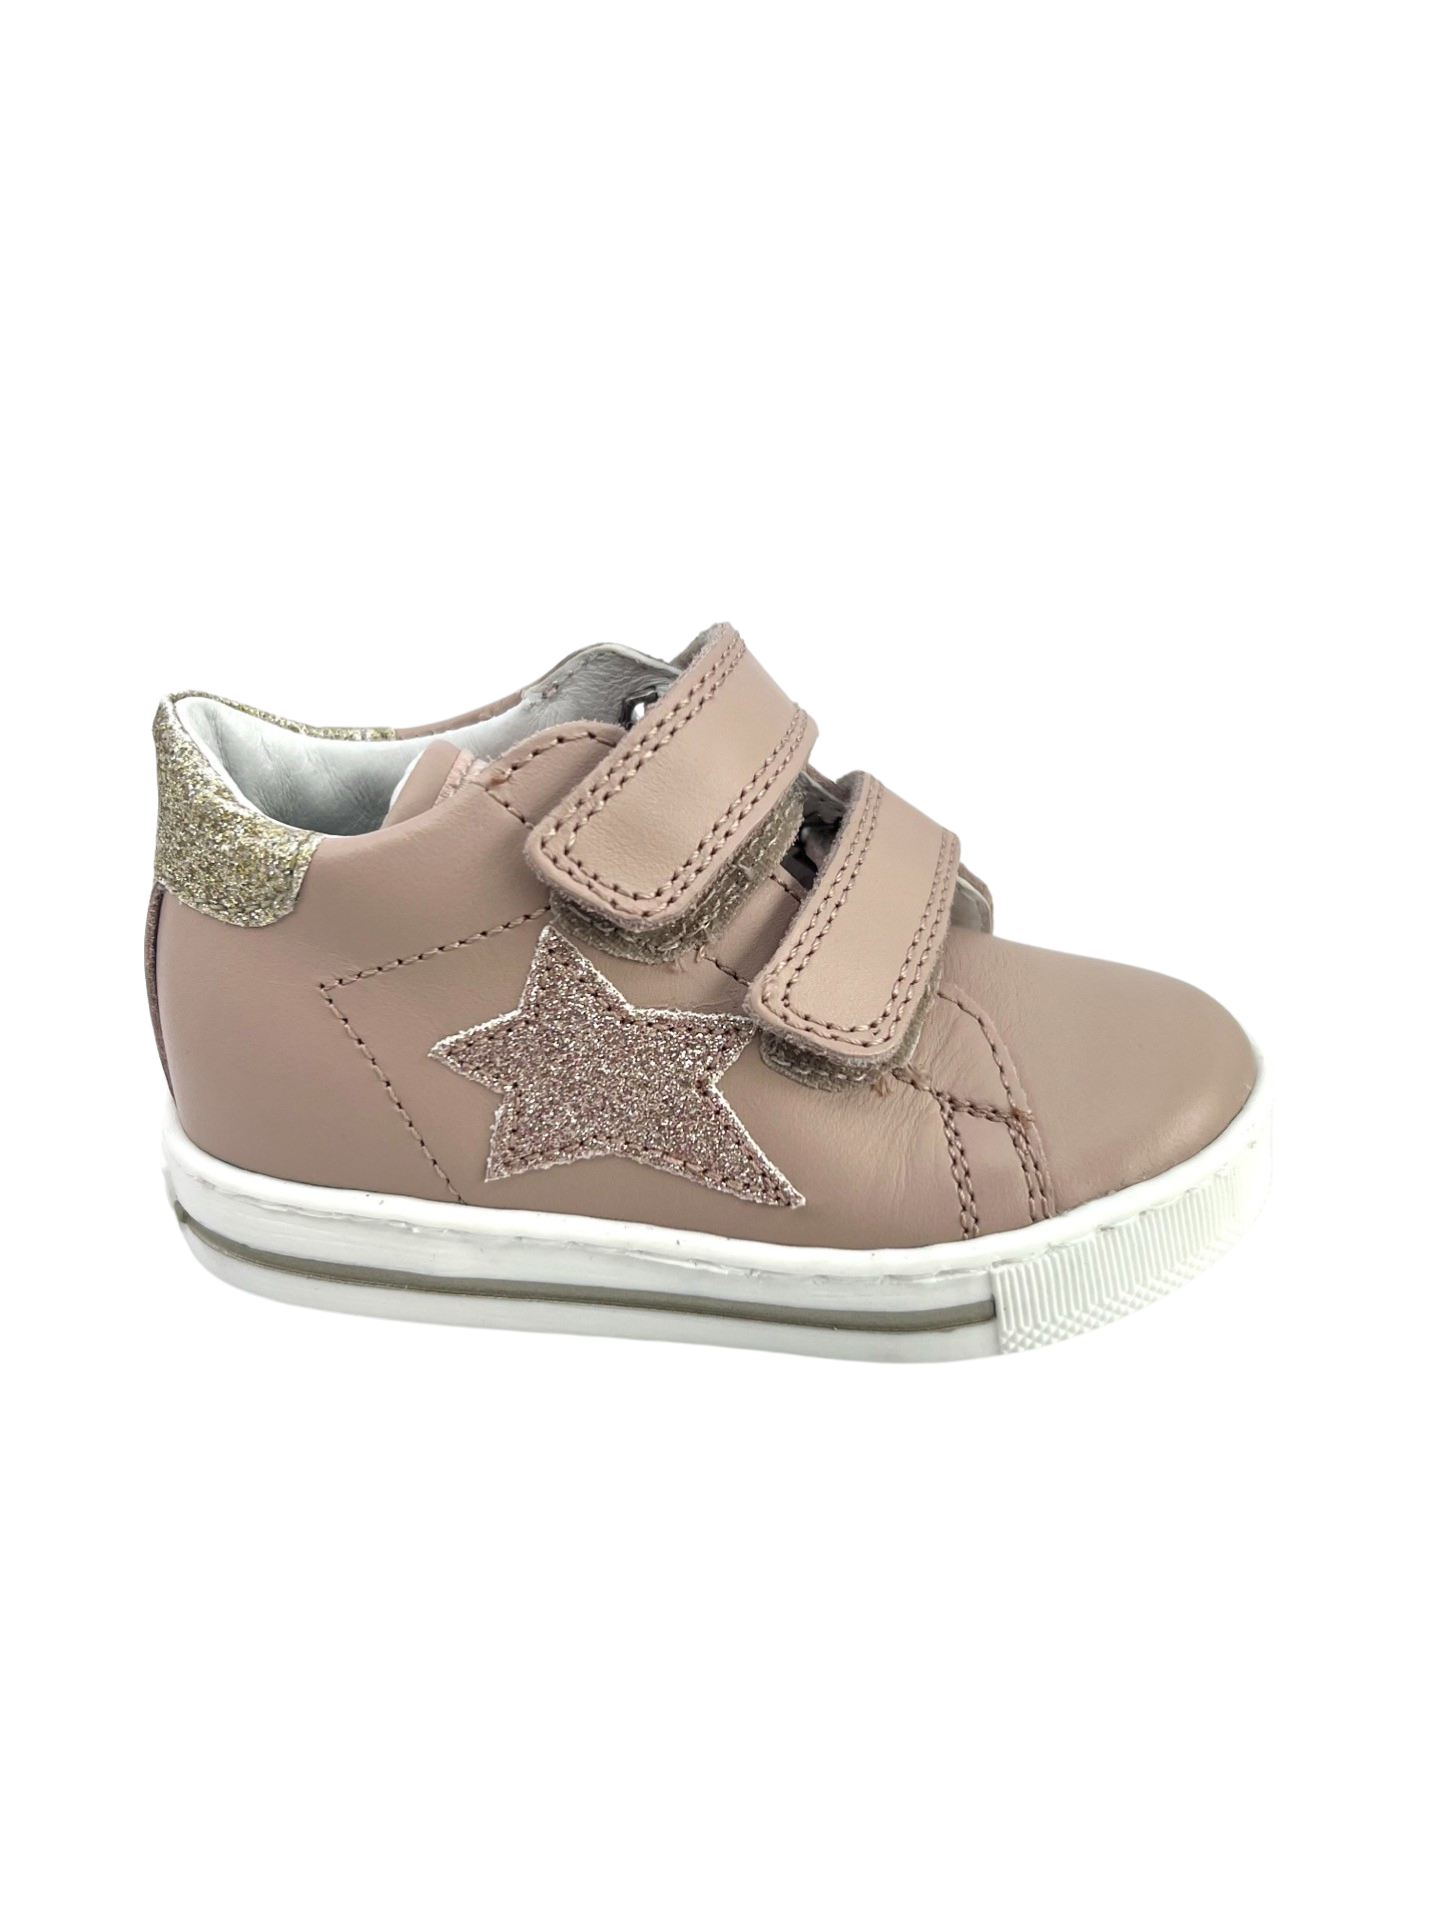 Falcotto Rose - Platinum Double Velcro Star Sneaker -  Sasha